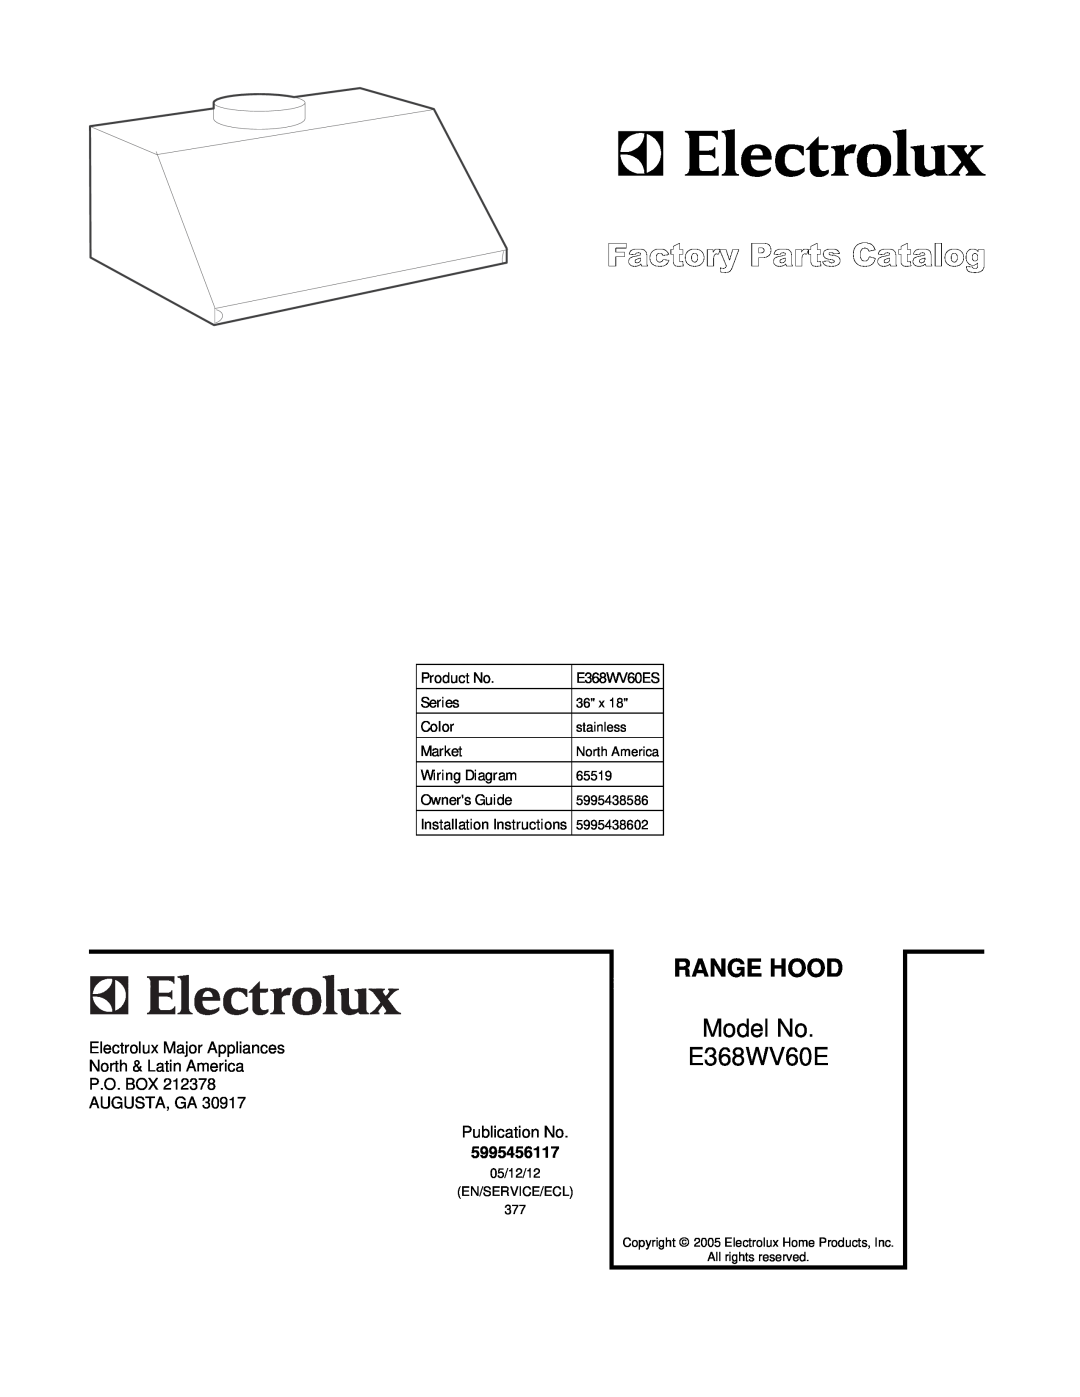 Electrolux E368WV60E installation instructions Range Hood, Model No 